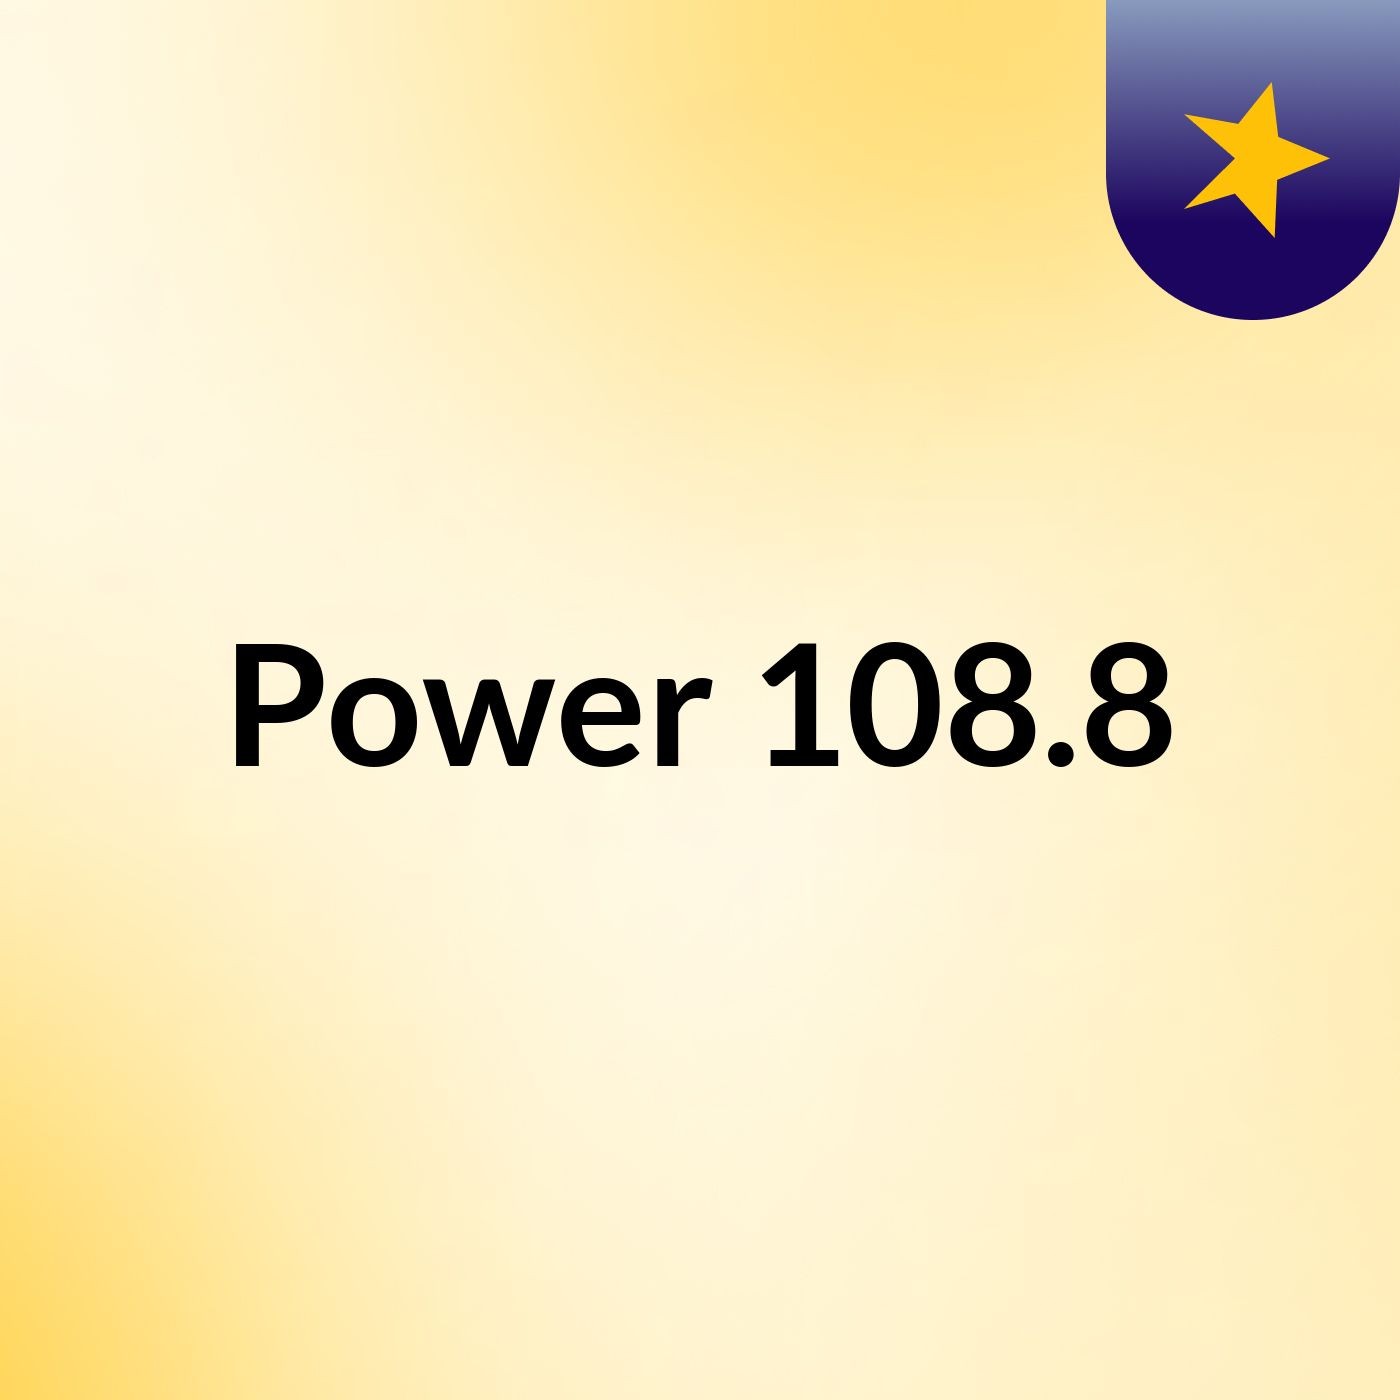 Power 108.8